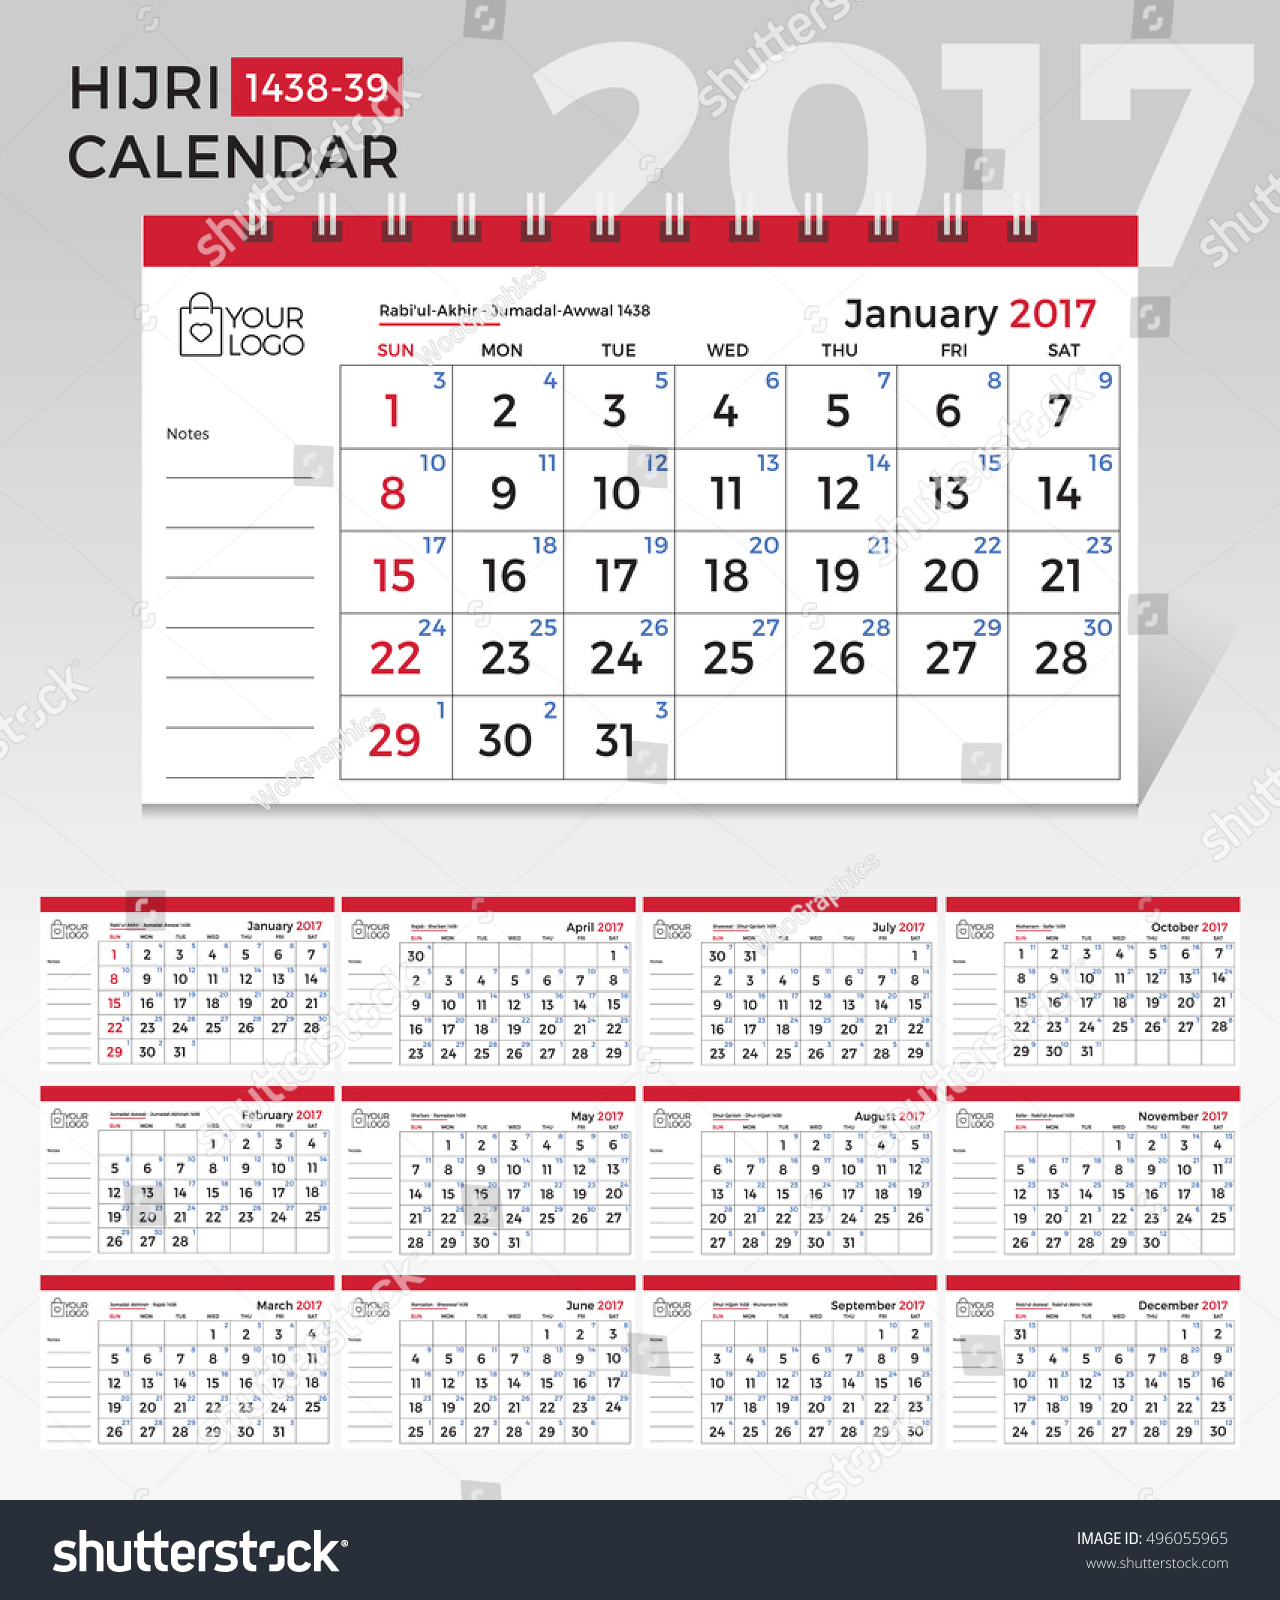 english converter arabic english calendar 2021 Hijri Islamic Calendar 2017 Simple Minimal Stock Vector Royalty Free 496055965 english converter arabic english calendar 2021